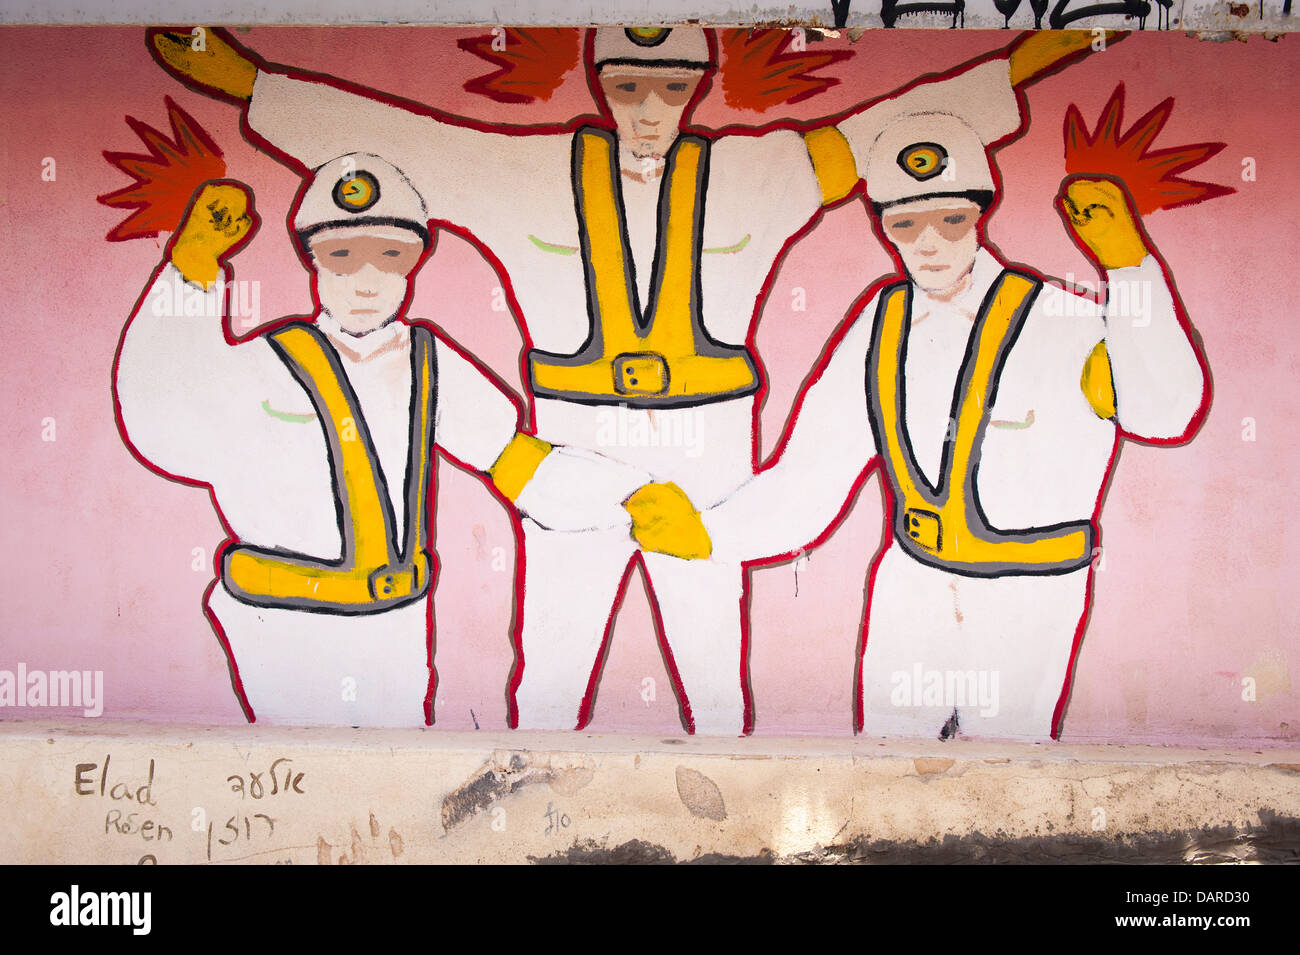 Israel Jaffa Yafo Old City graffiti street art mural 3 three figures in white jumpsuits helmets & yellow webbing & red wings by Elad Rosen Stock Photo